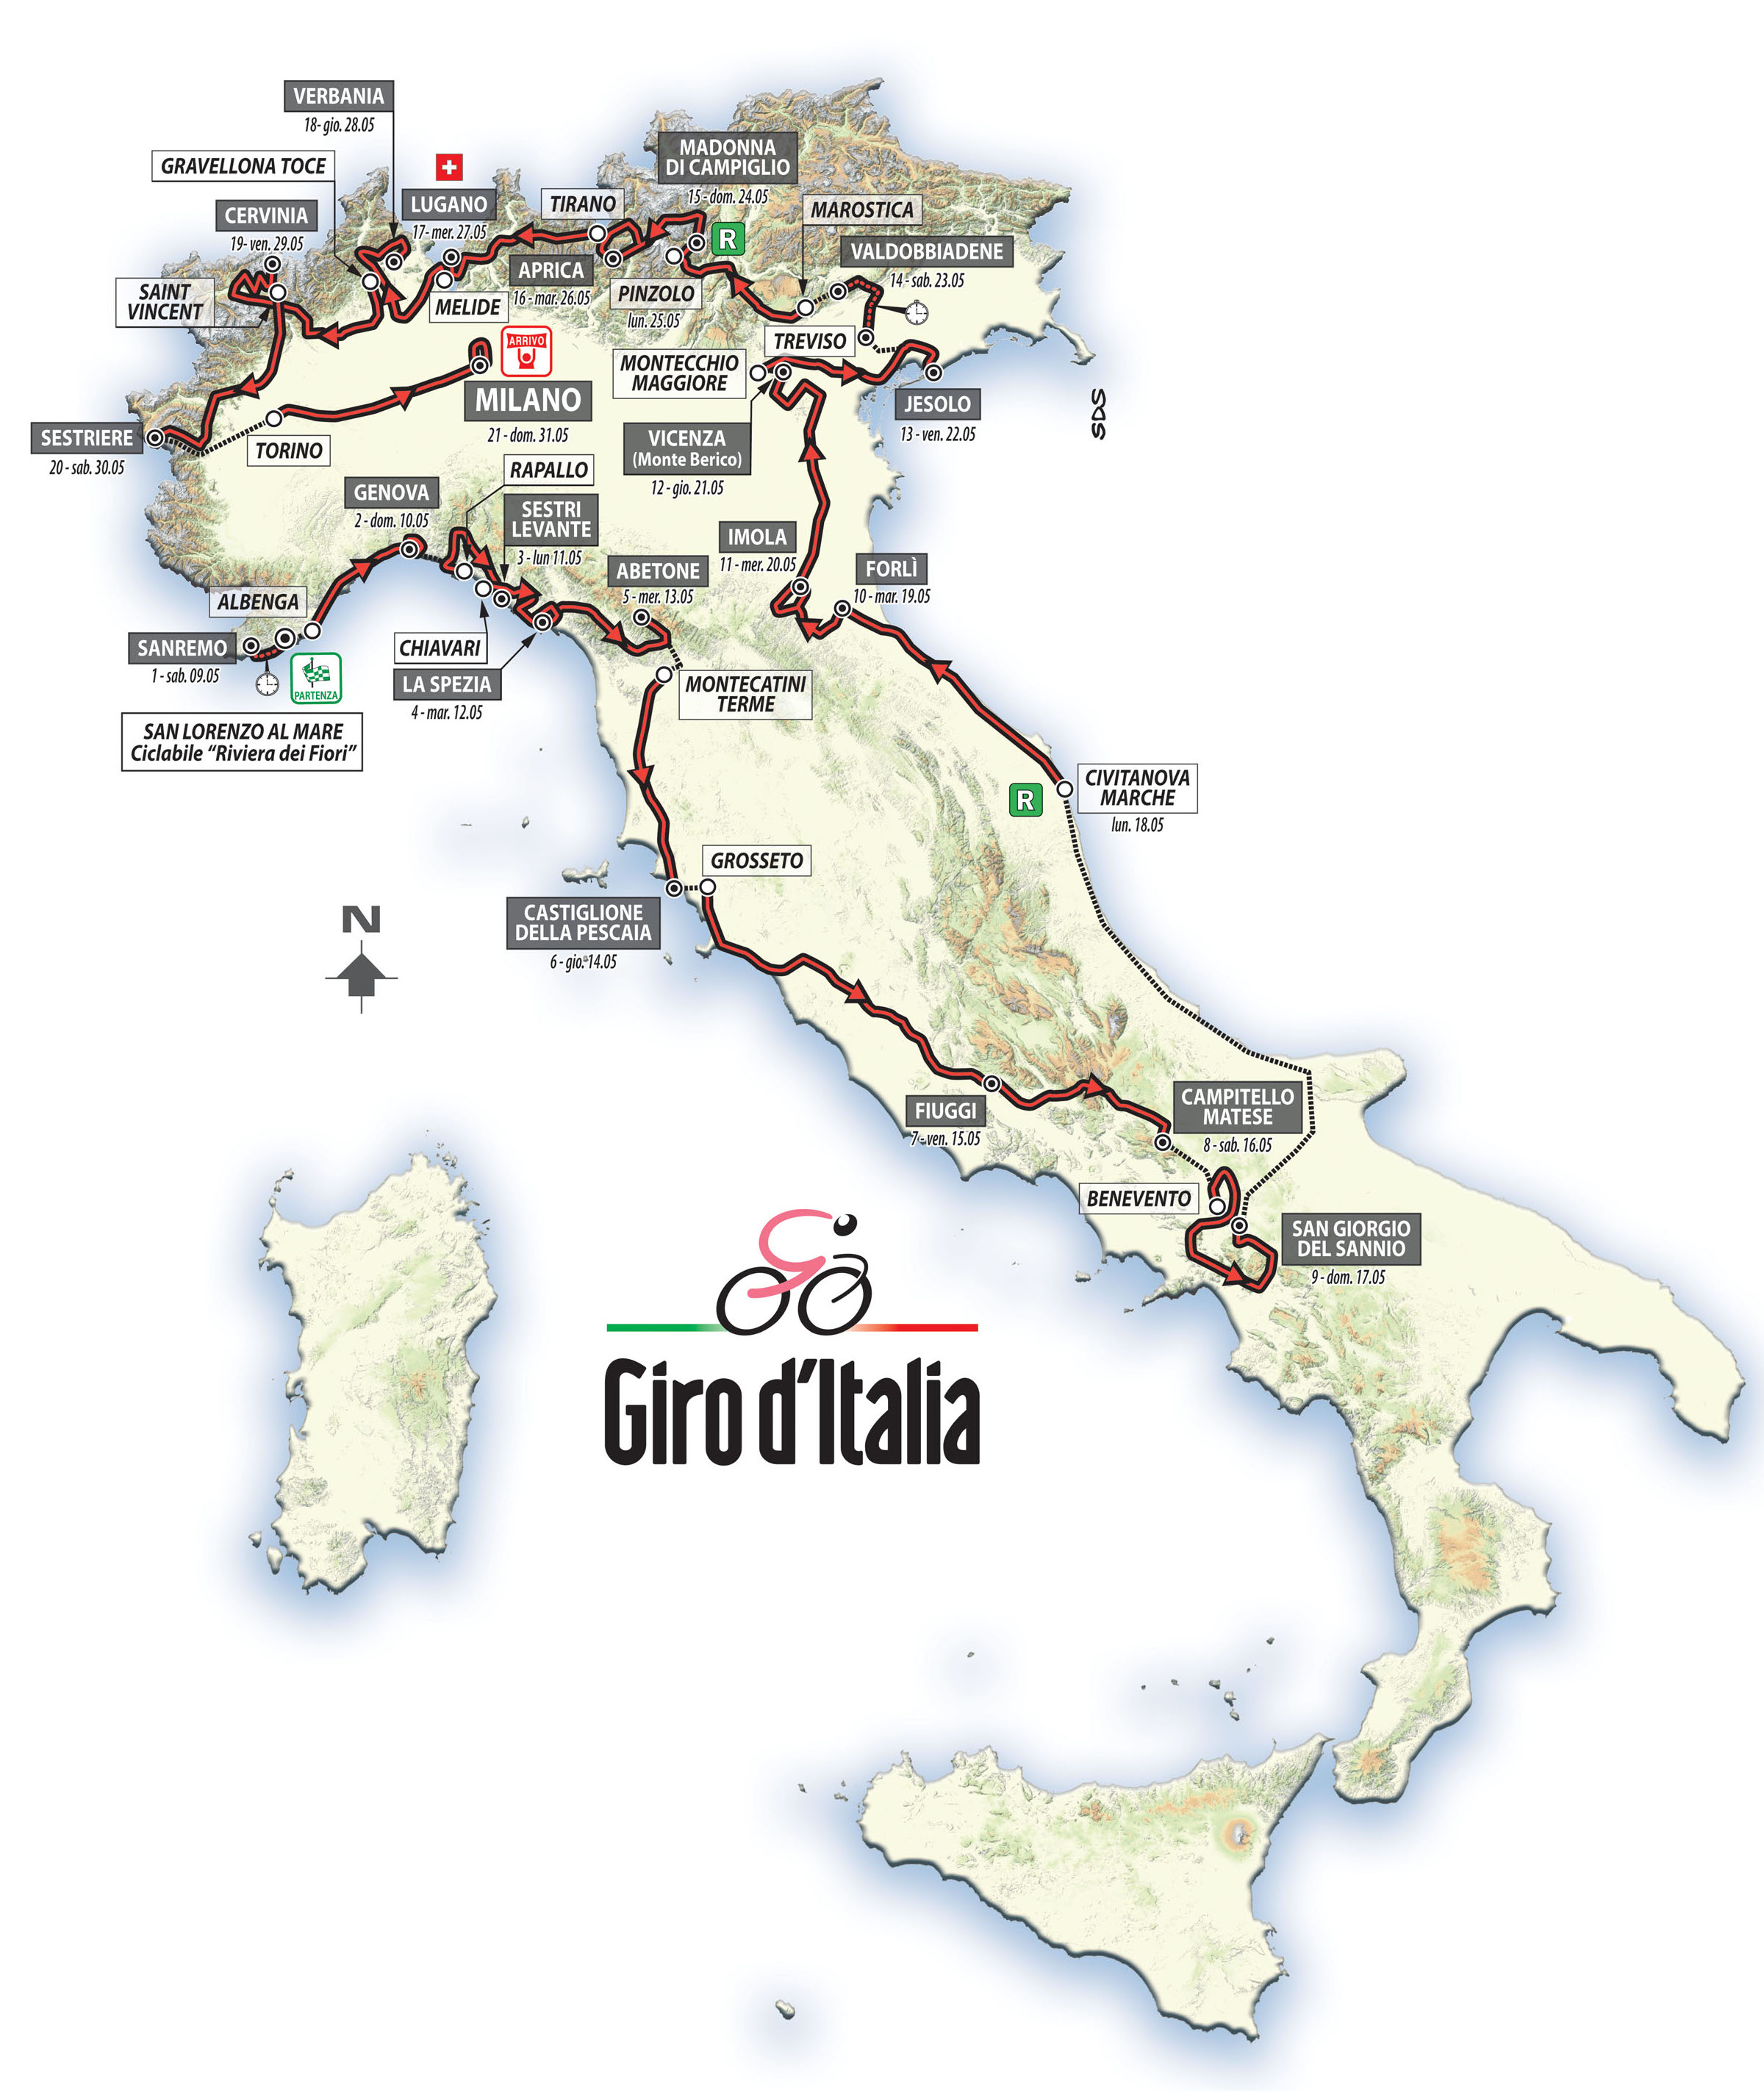 Giro d'Italia Route Map